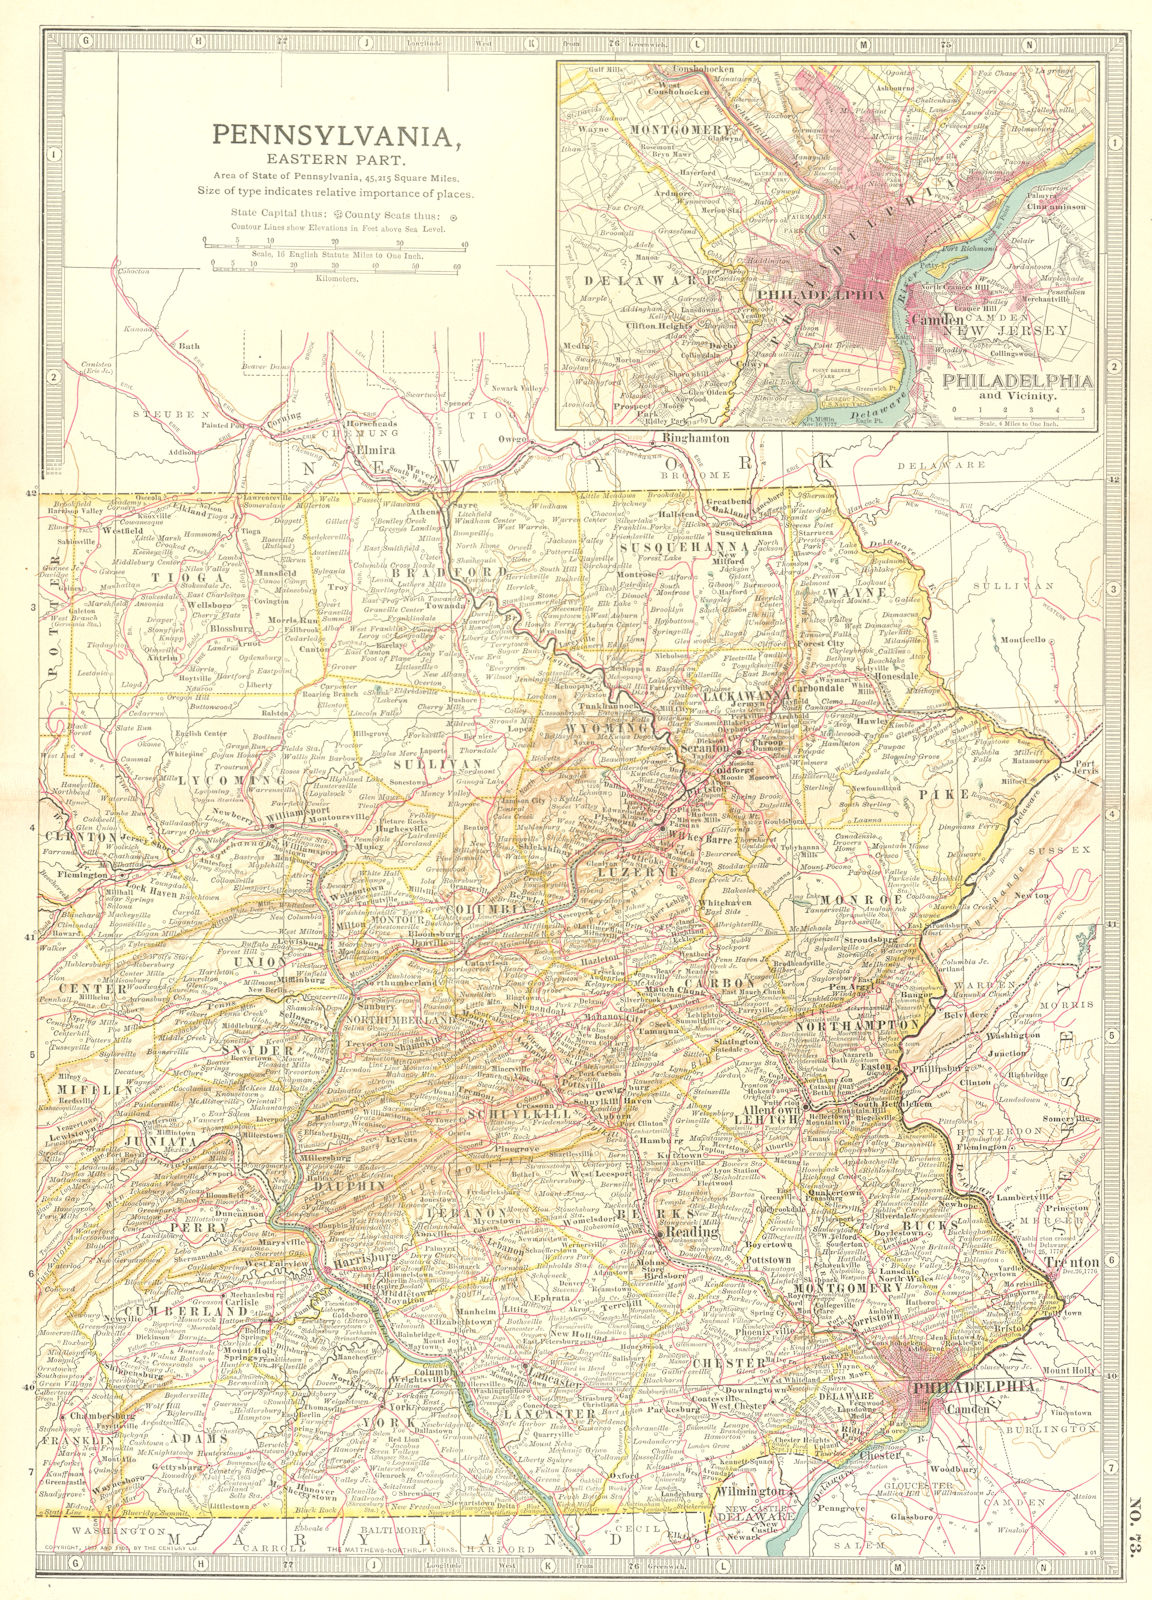 PENNSYLVANIA EAST,PHILADELPHIA. Shows Gettysburg & 1777 battles/dates 1903 map